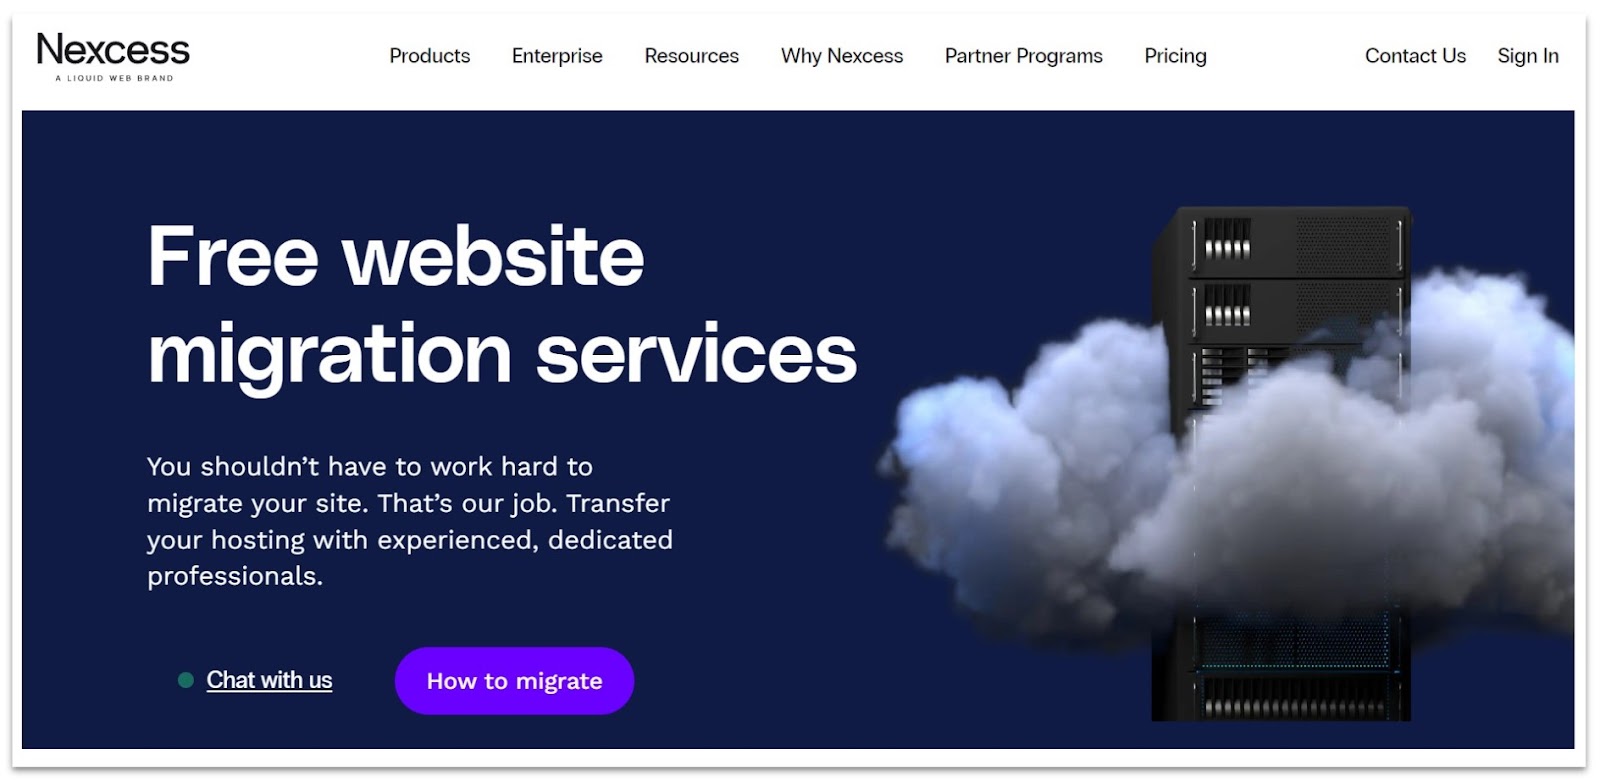 Nexcess free website migration services